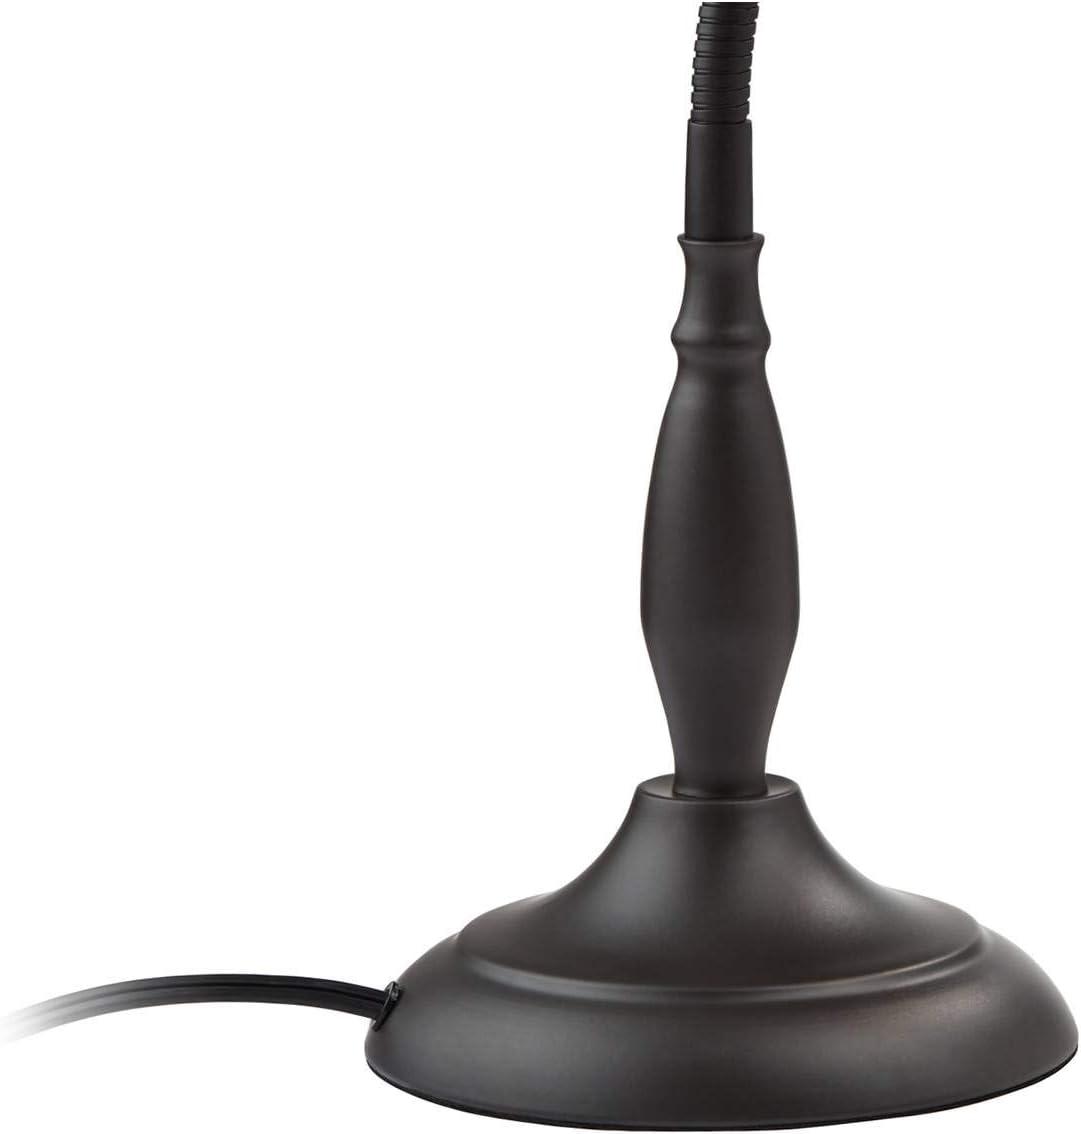 Adjustable Arc Kids Desk Lamp in Dark Bronze with Gooseneck